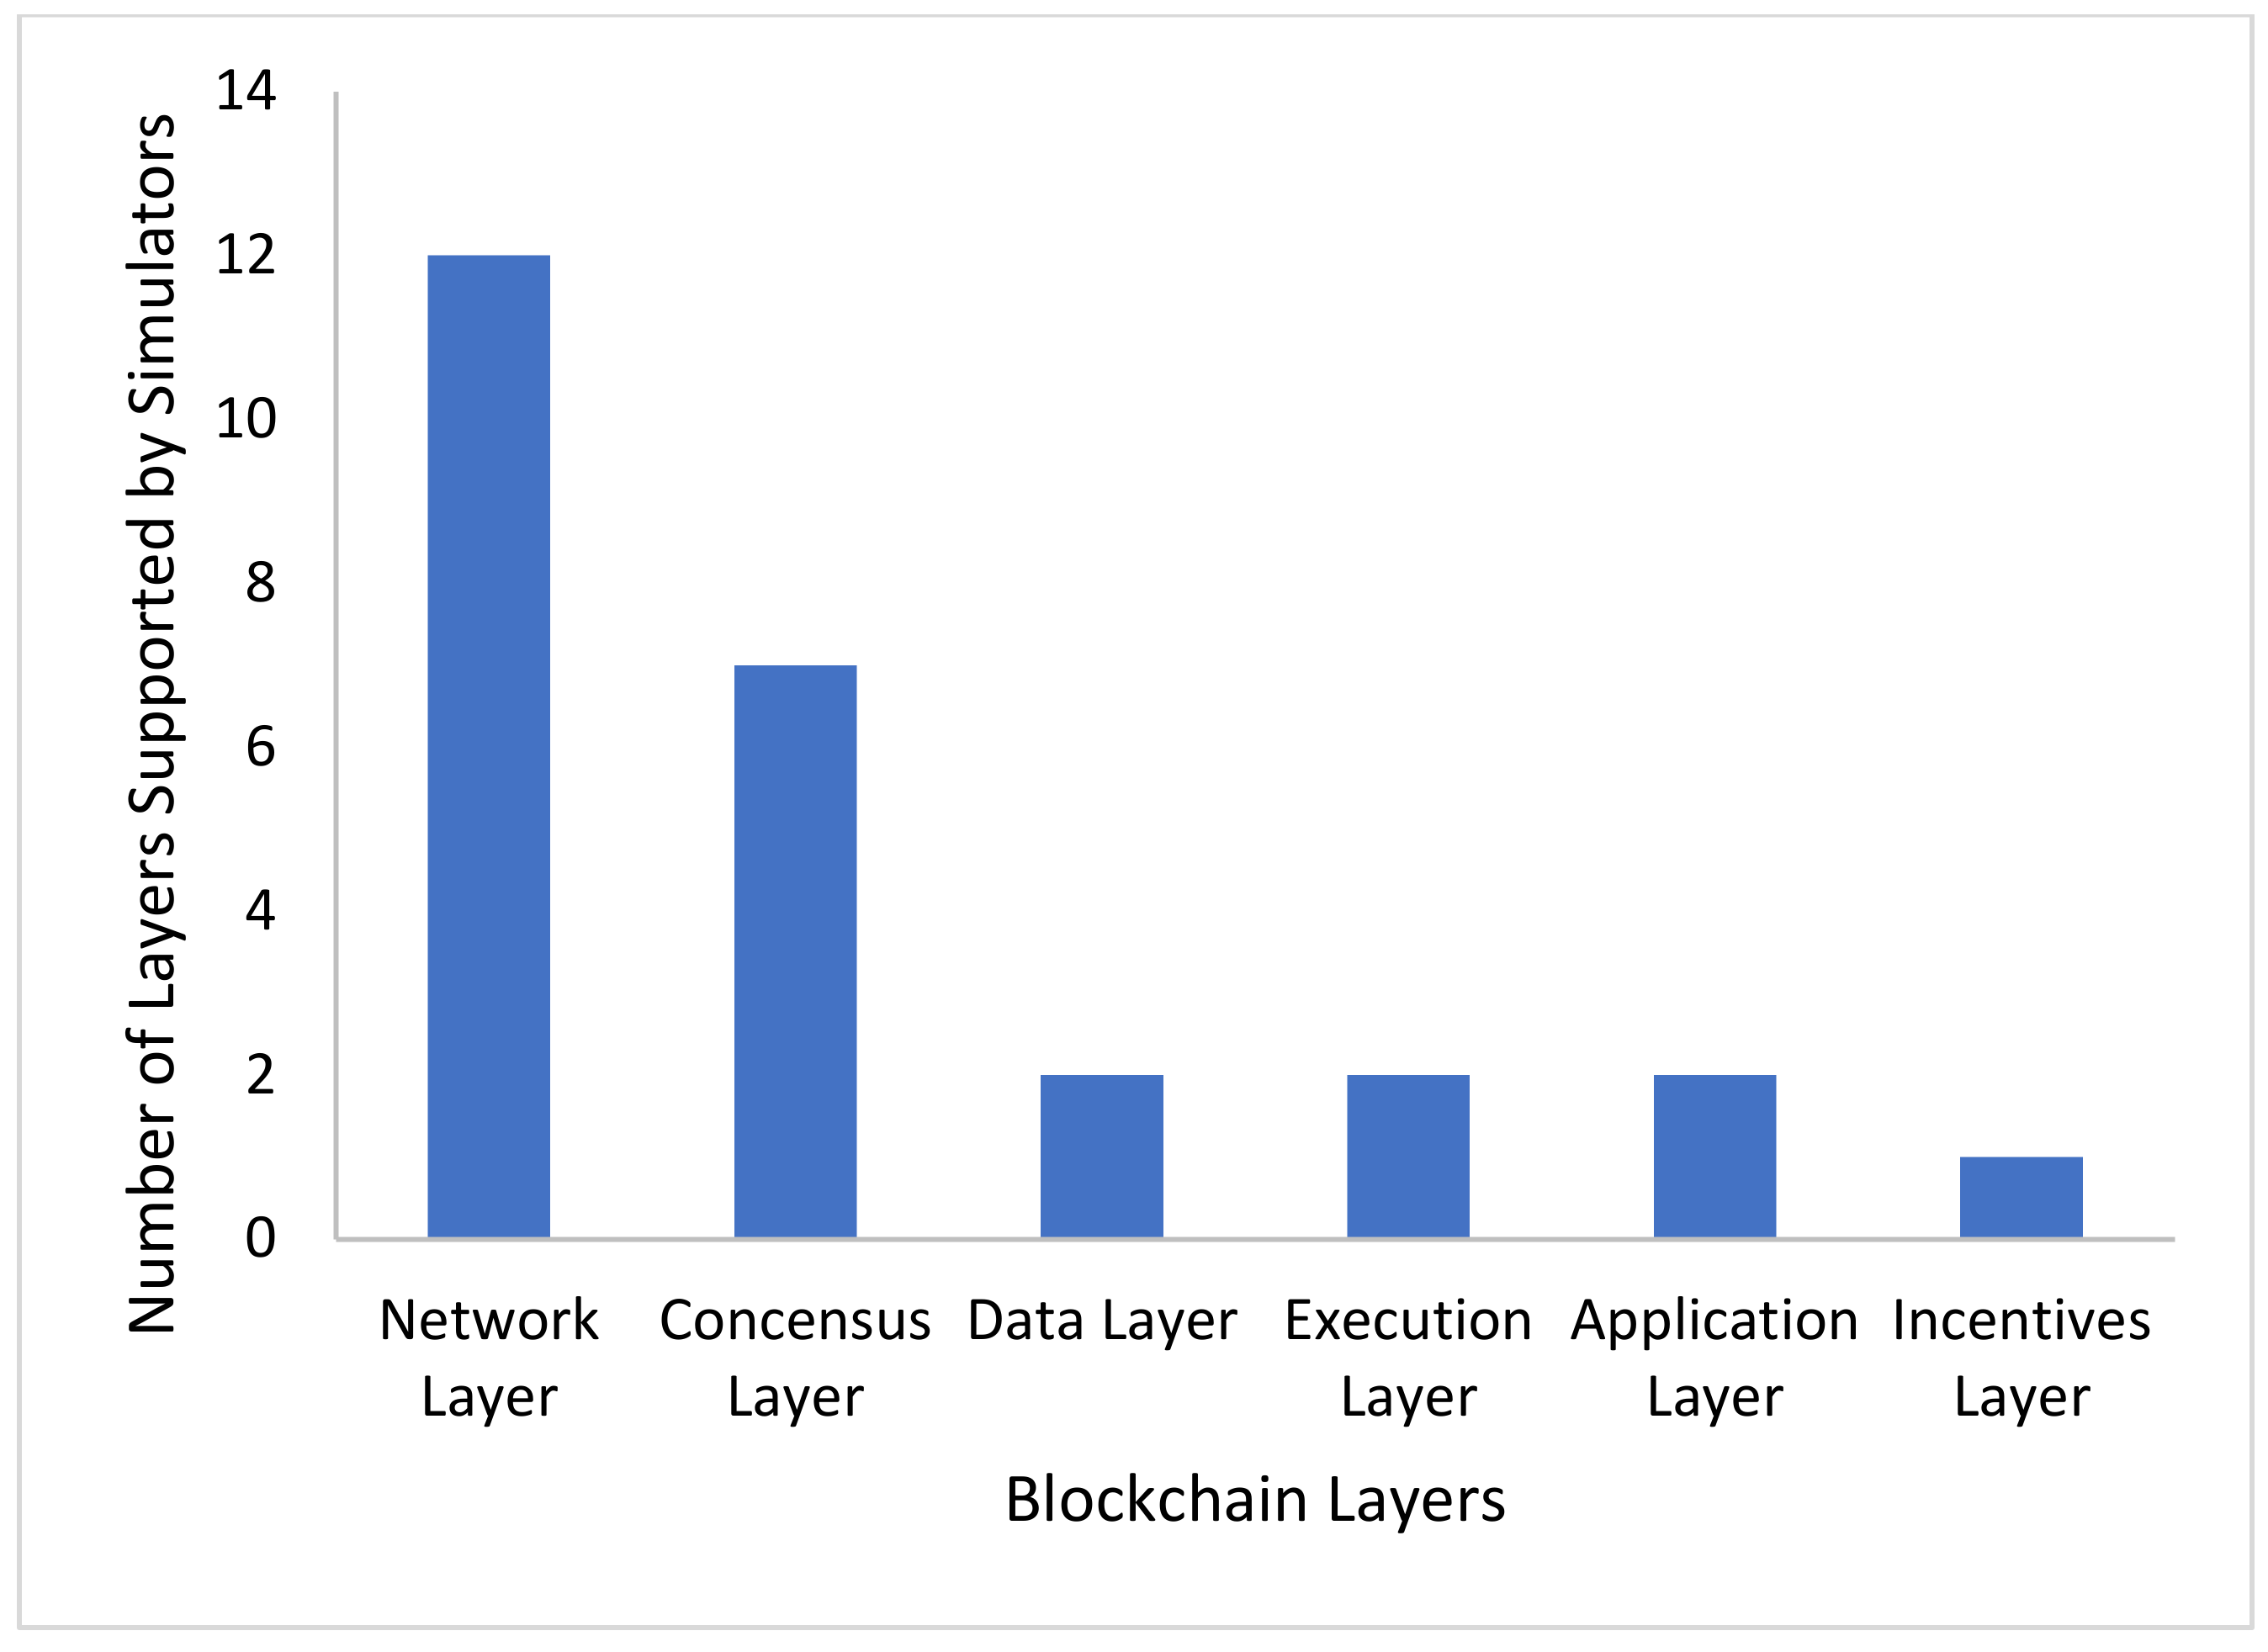 PDF) BlockSim-Net: A Network Based Blockchain Simulator